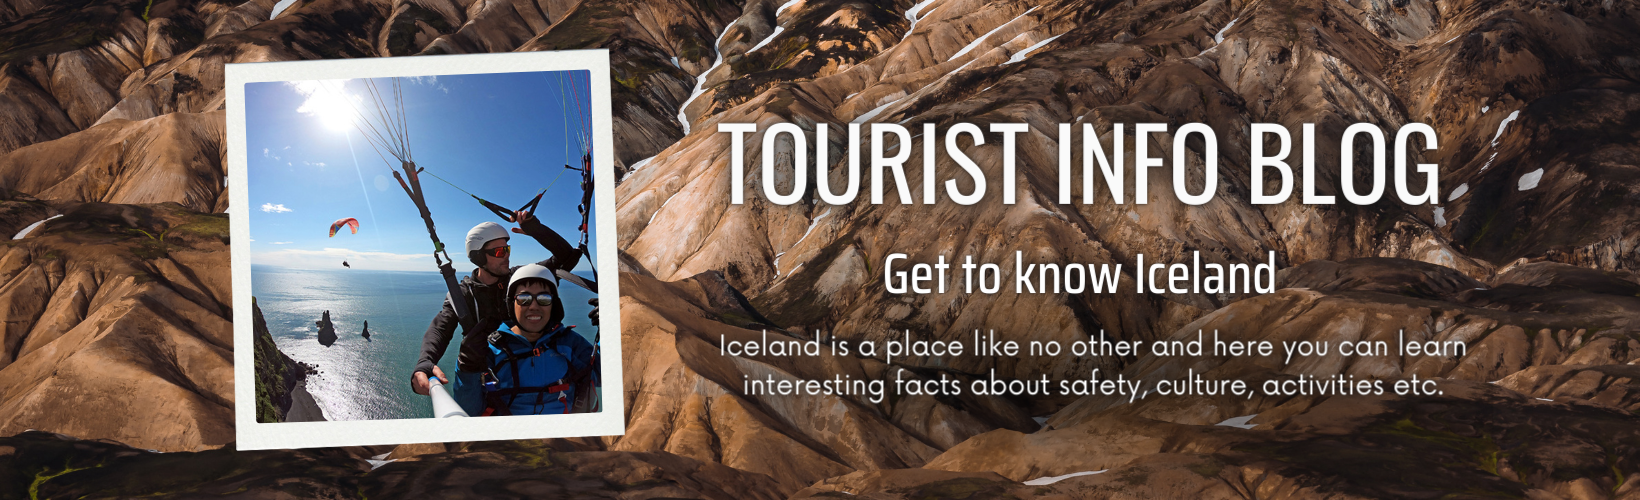 Tourist info blog